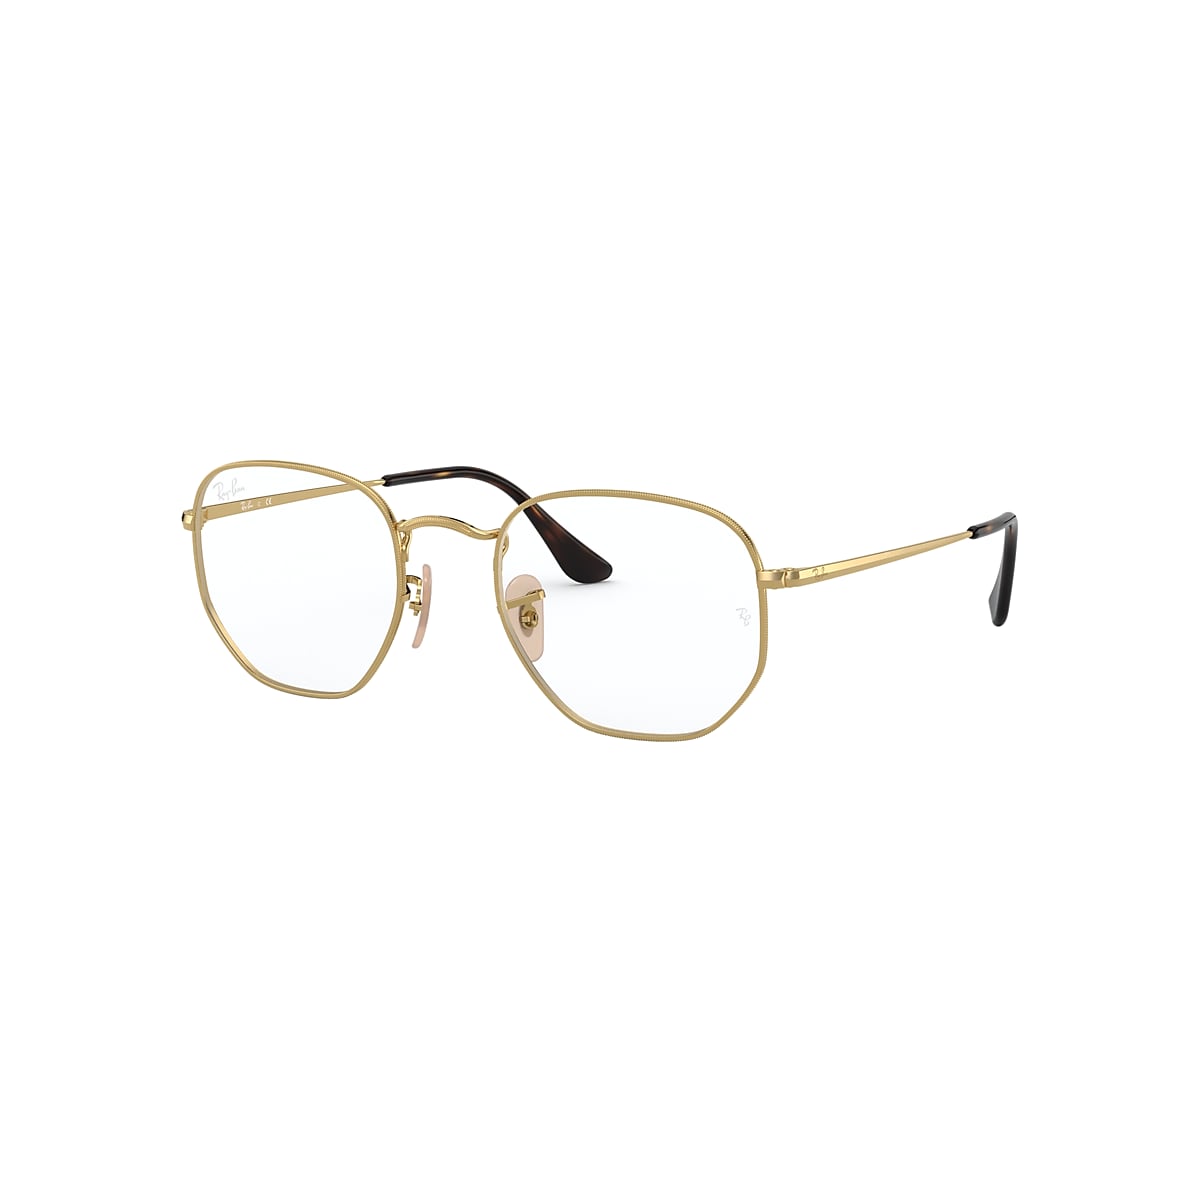 Sudor concepto brillo Gafas de Vista Ópticas Hexagonales con Montura en Oro | Ray-Ban®